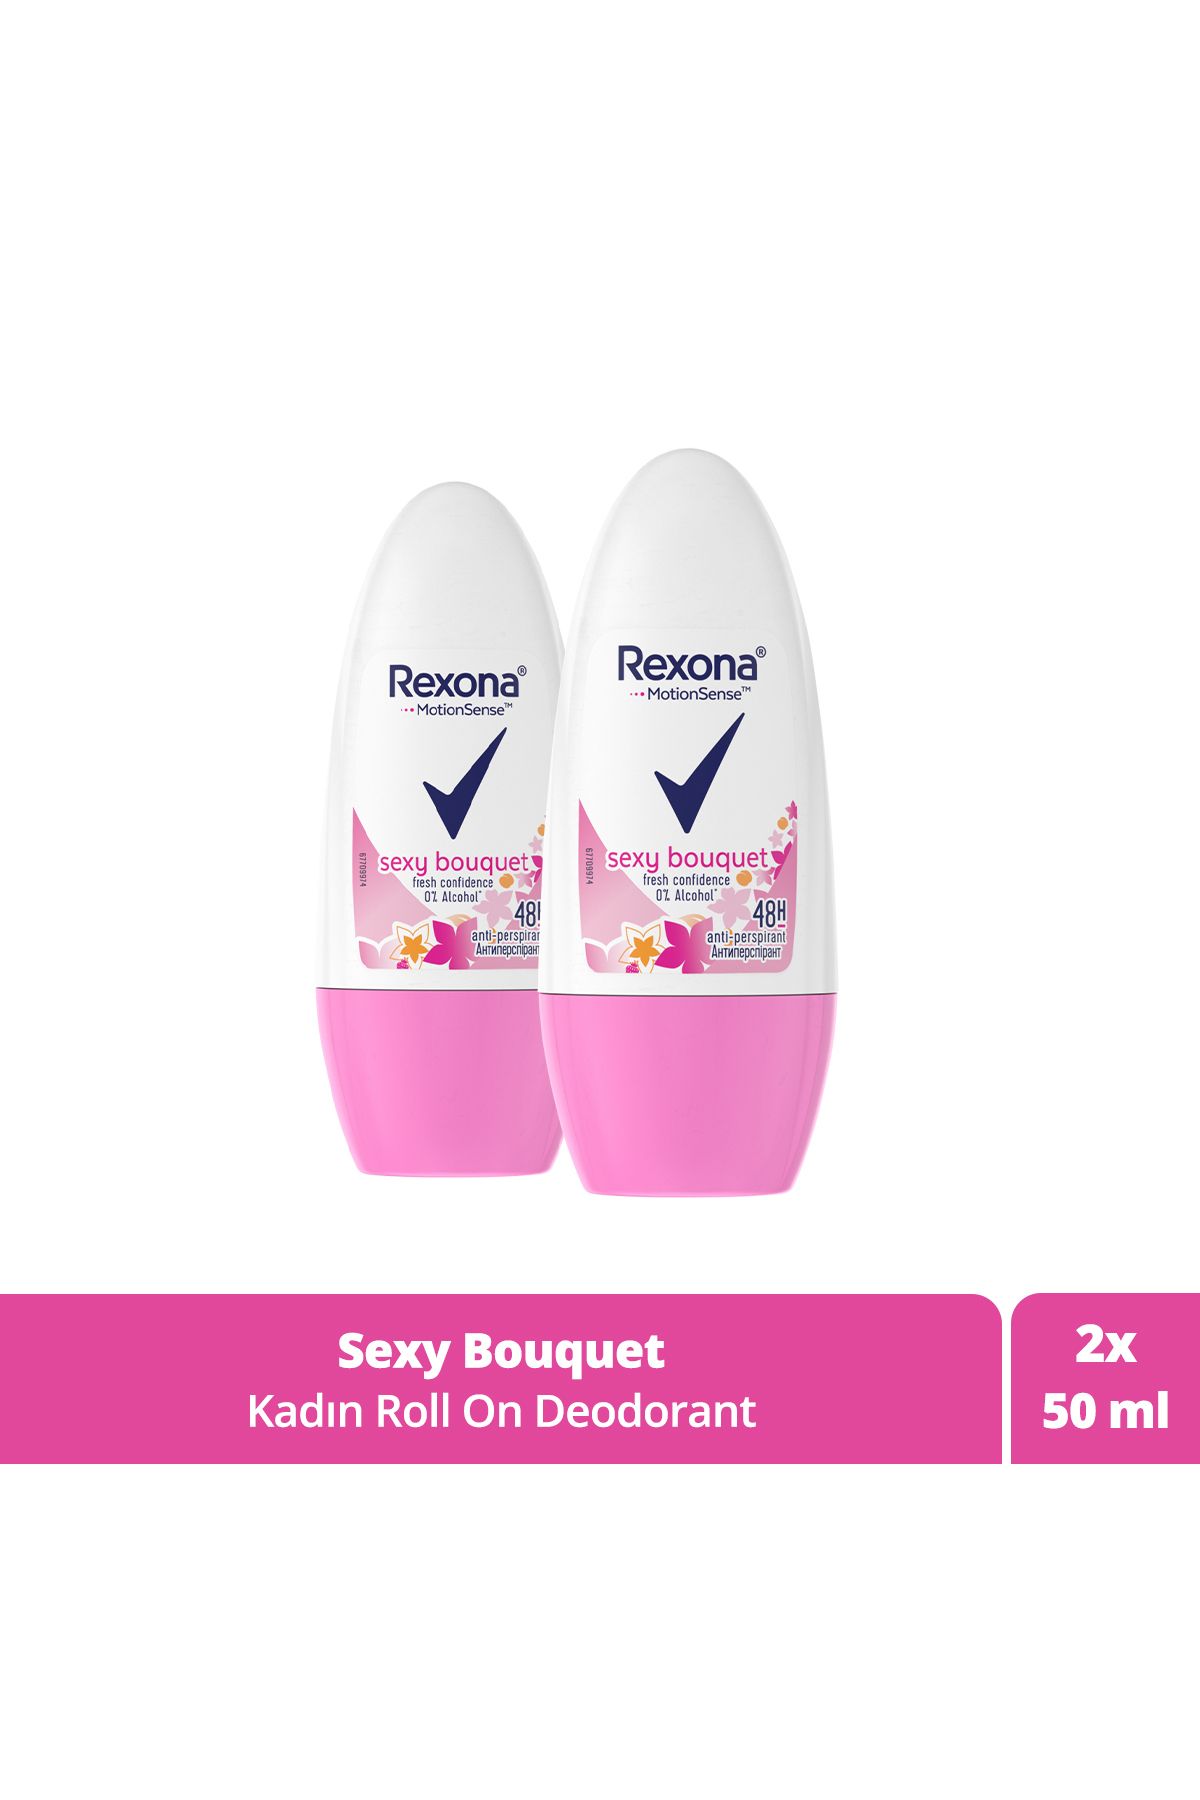 Rexona Kadın Roll On Deodorant Sexy Bouquet 50 ml X2 Adet